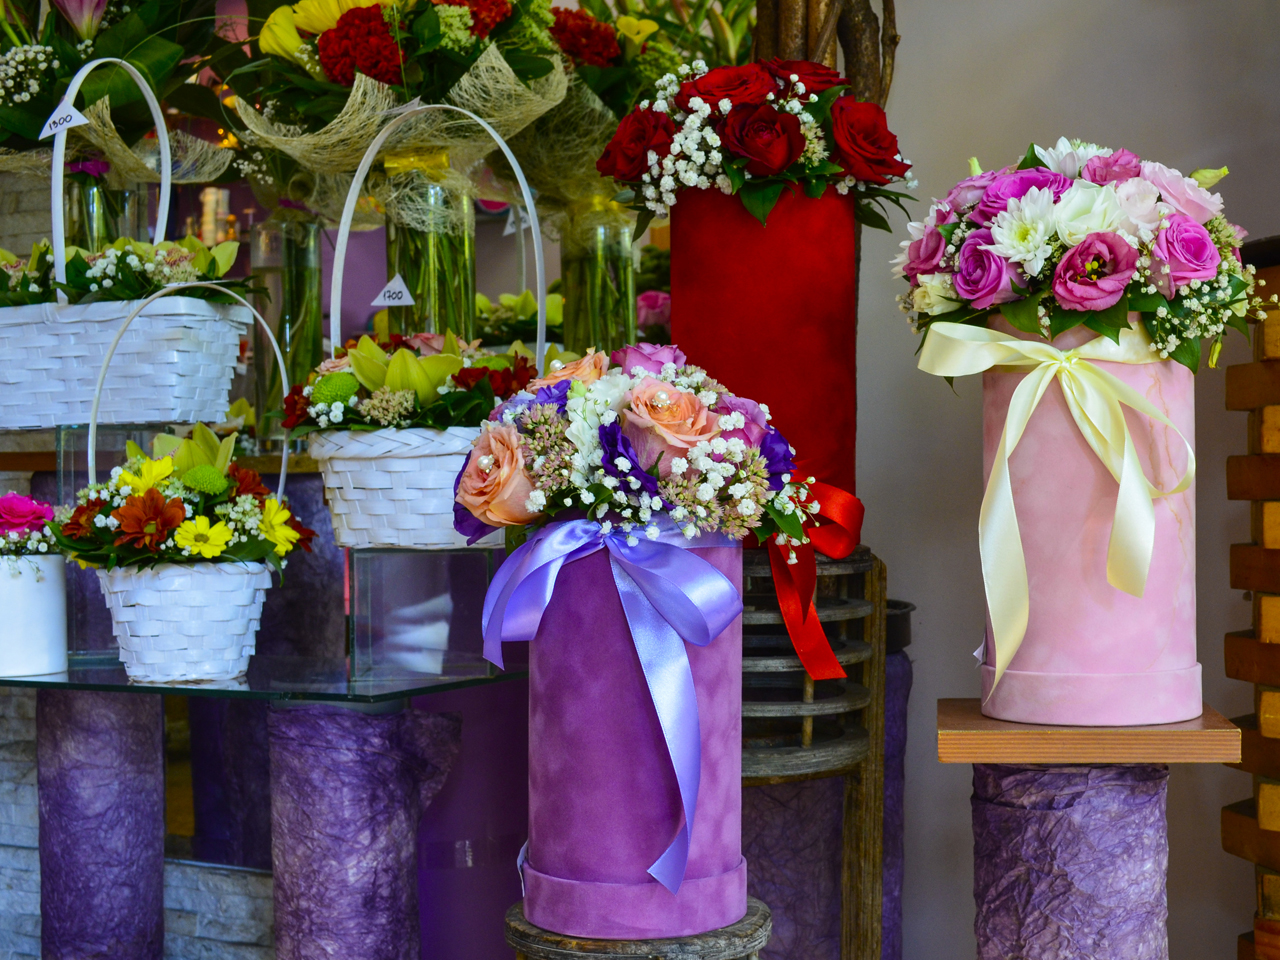 HOLLYWOOD FLOWER SHOP Flowers, flower shops Belgrade - Photo 4